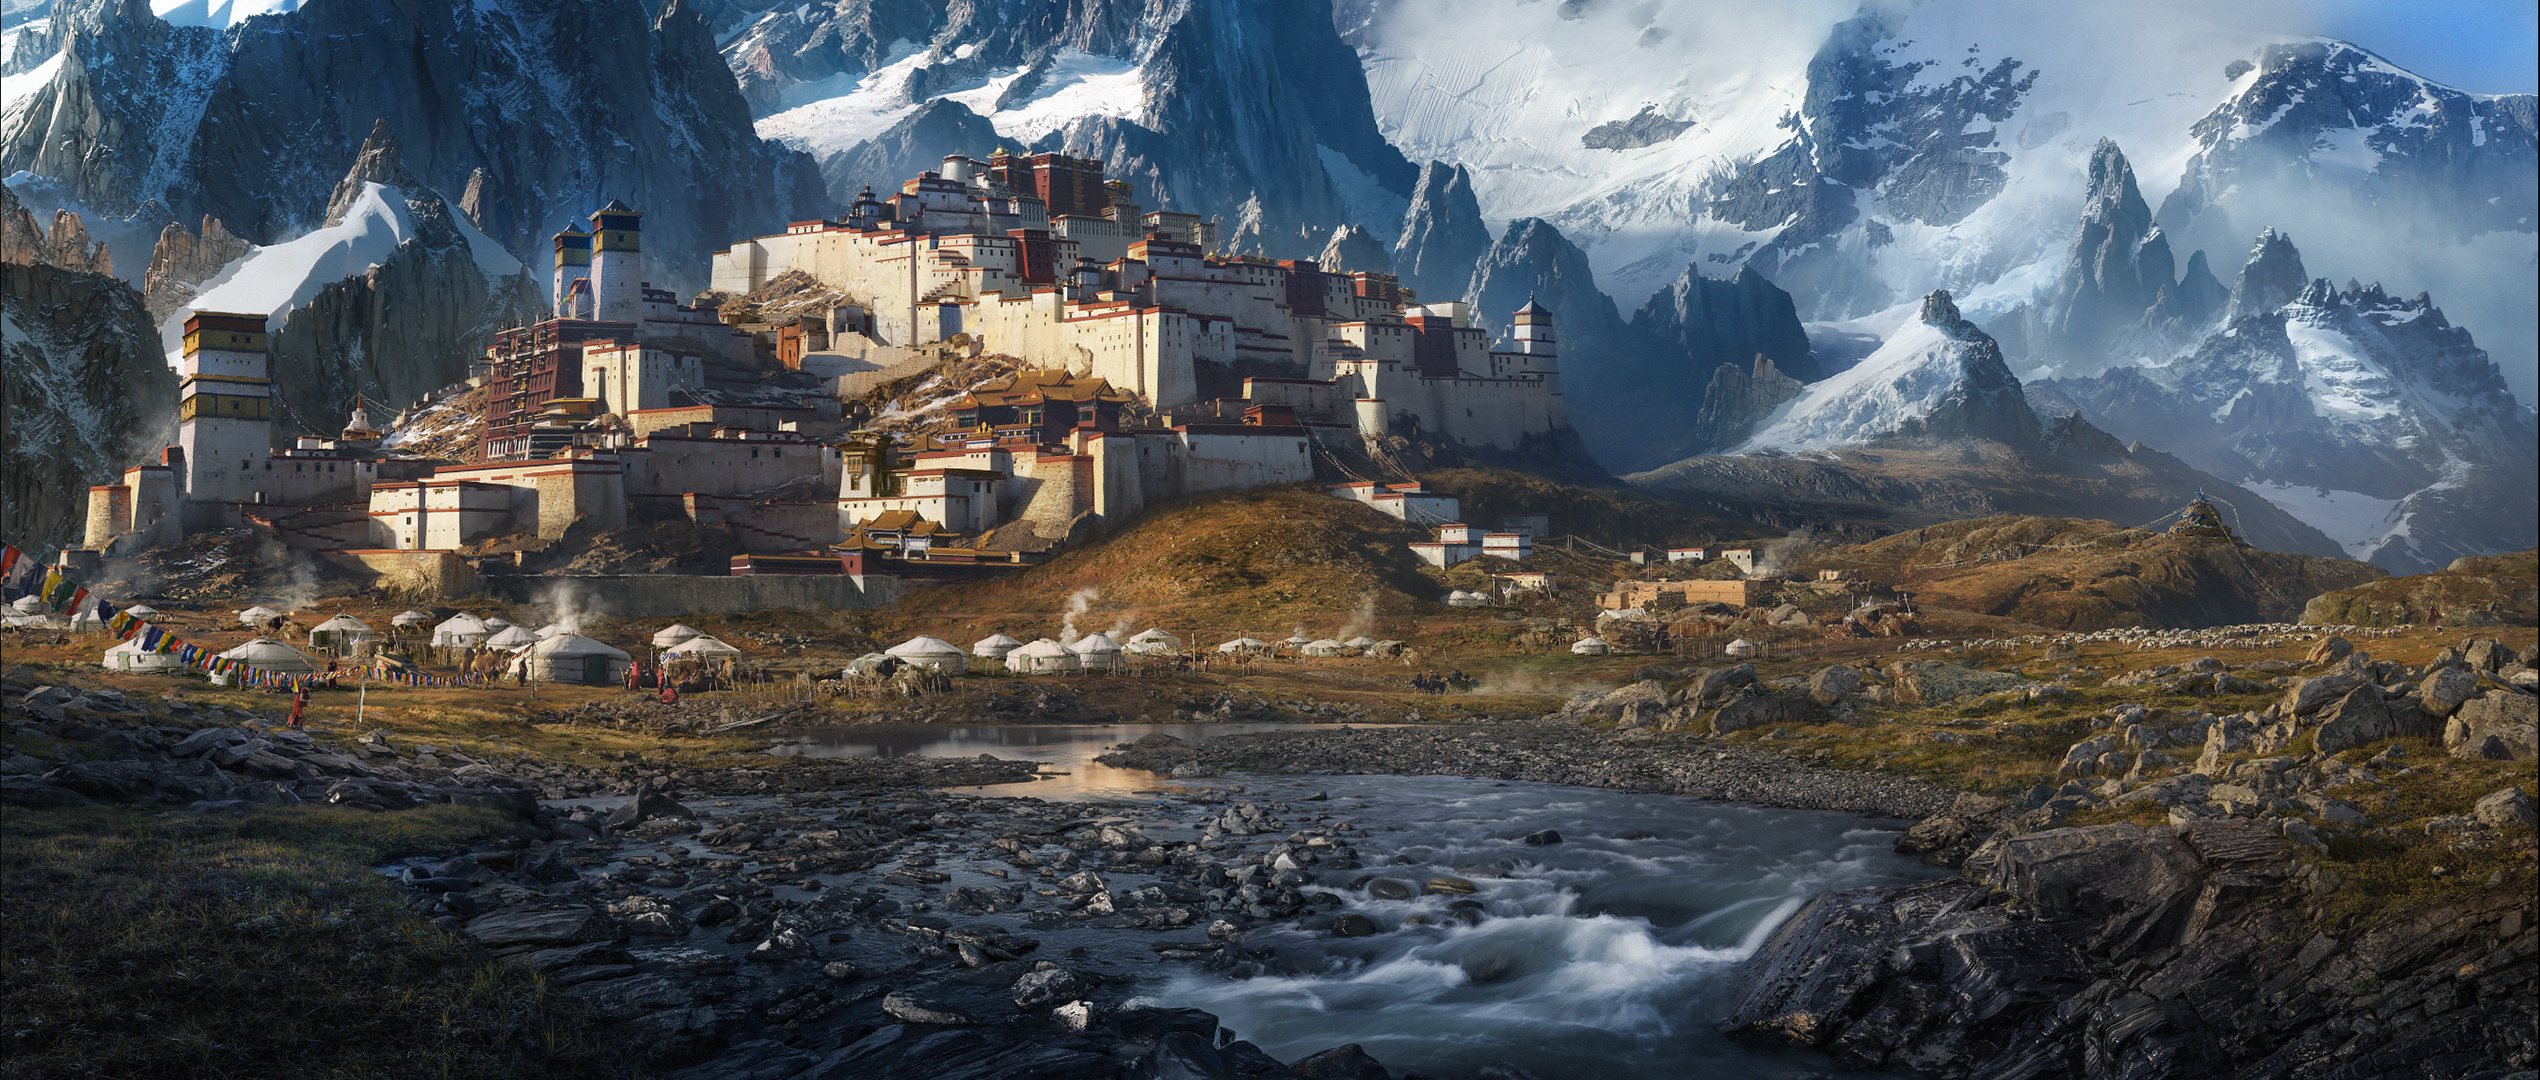 Tibetan Highlands, Ultra wide wallpapers, Stunning landscapes, Captivating scenery, 2540x1080 Dual Screen Desktop